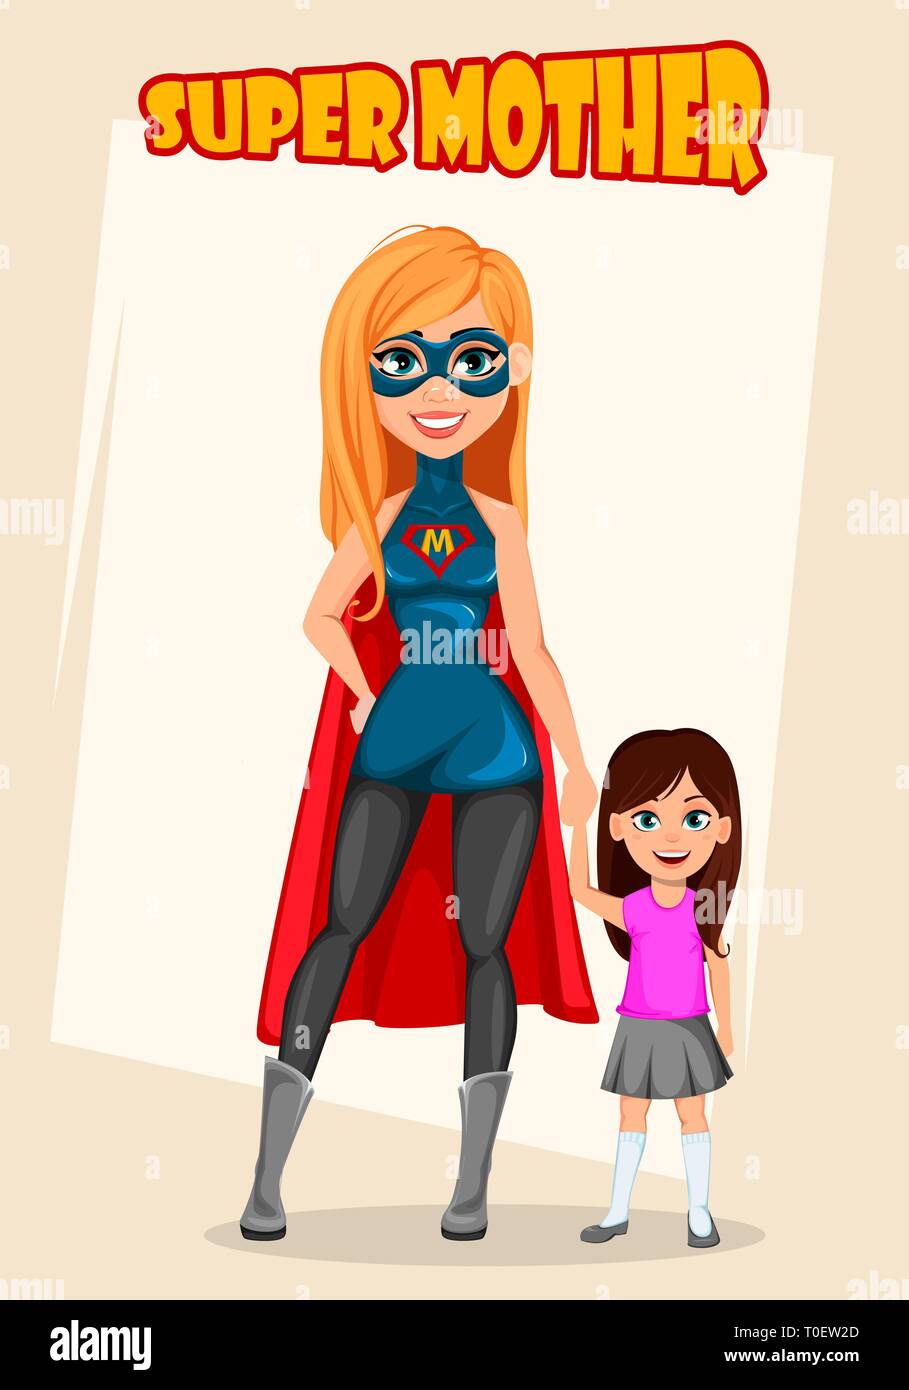 Super mother woman superhero. Concept of woman wearing superhero costume. Cartoon character standing with her daughter. Vector illustration Stock Vector